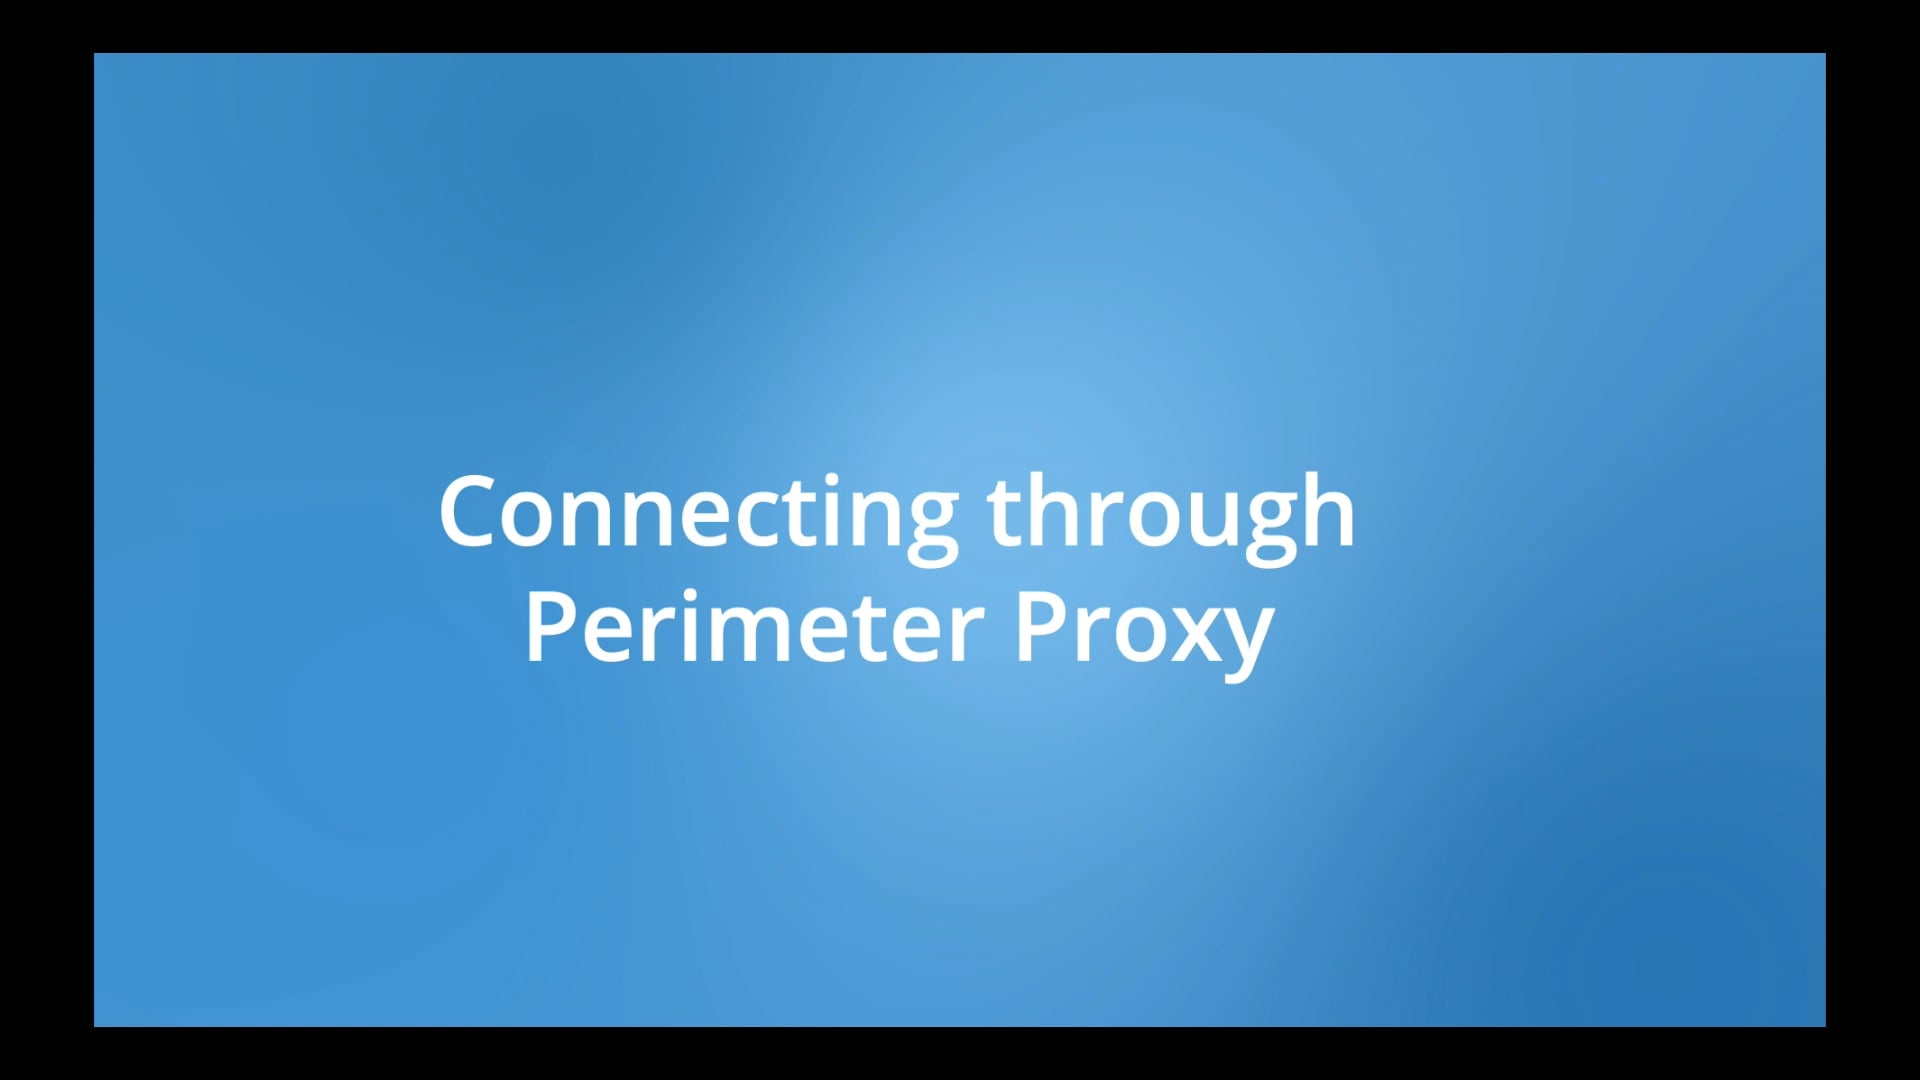 QGS - Connecting through Perimeter Proxy